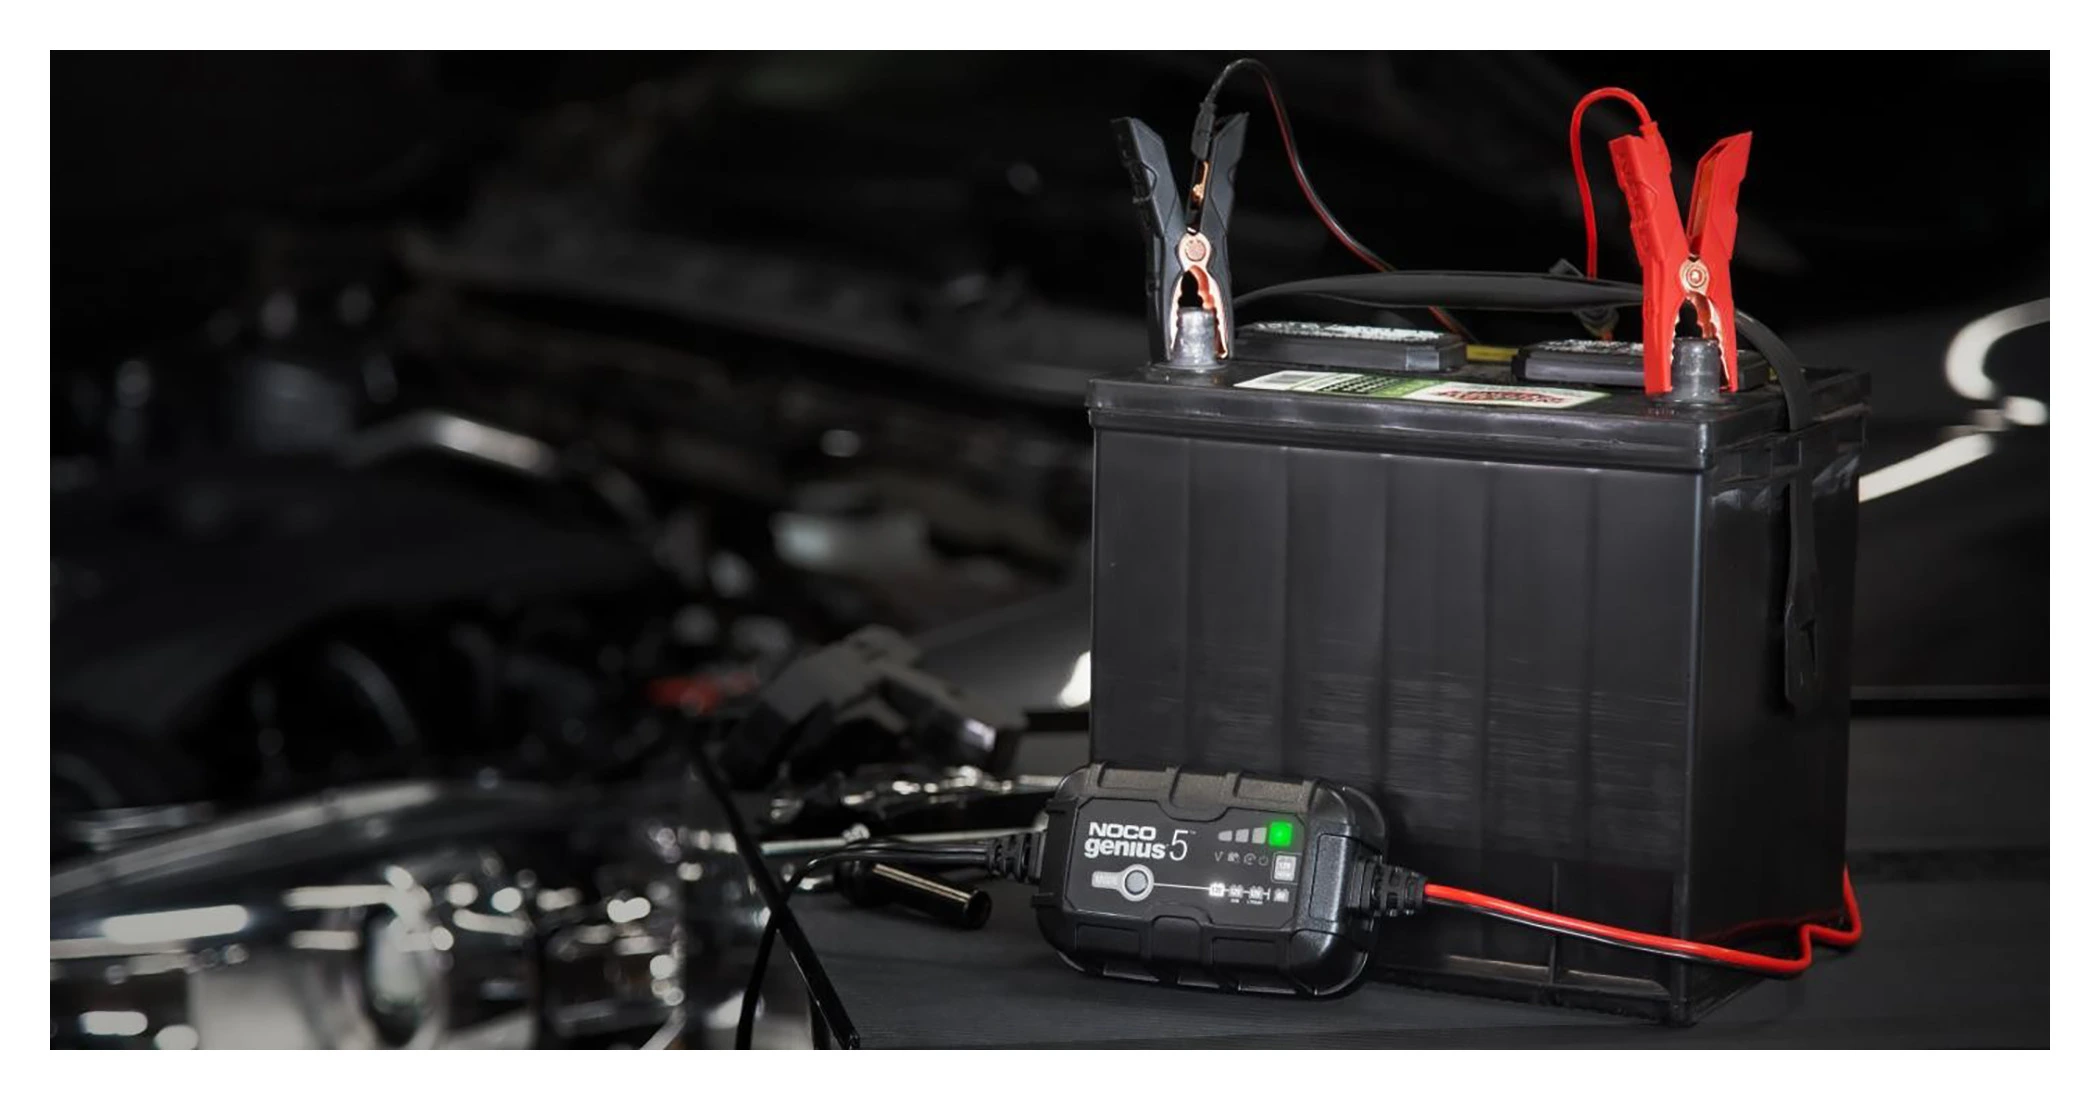 5a Smart-autobatterieladegerät, 6v-12v-autoladegerät